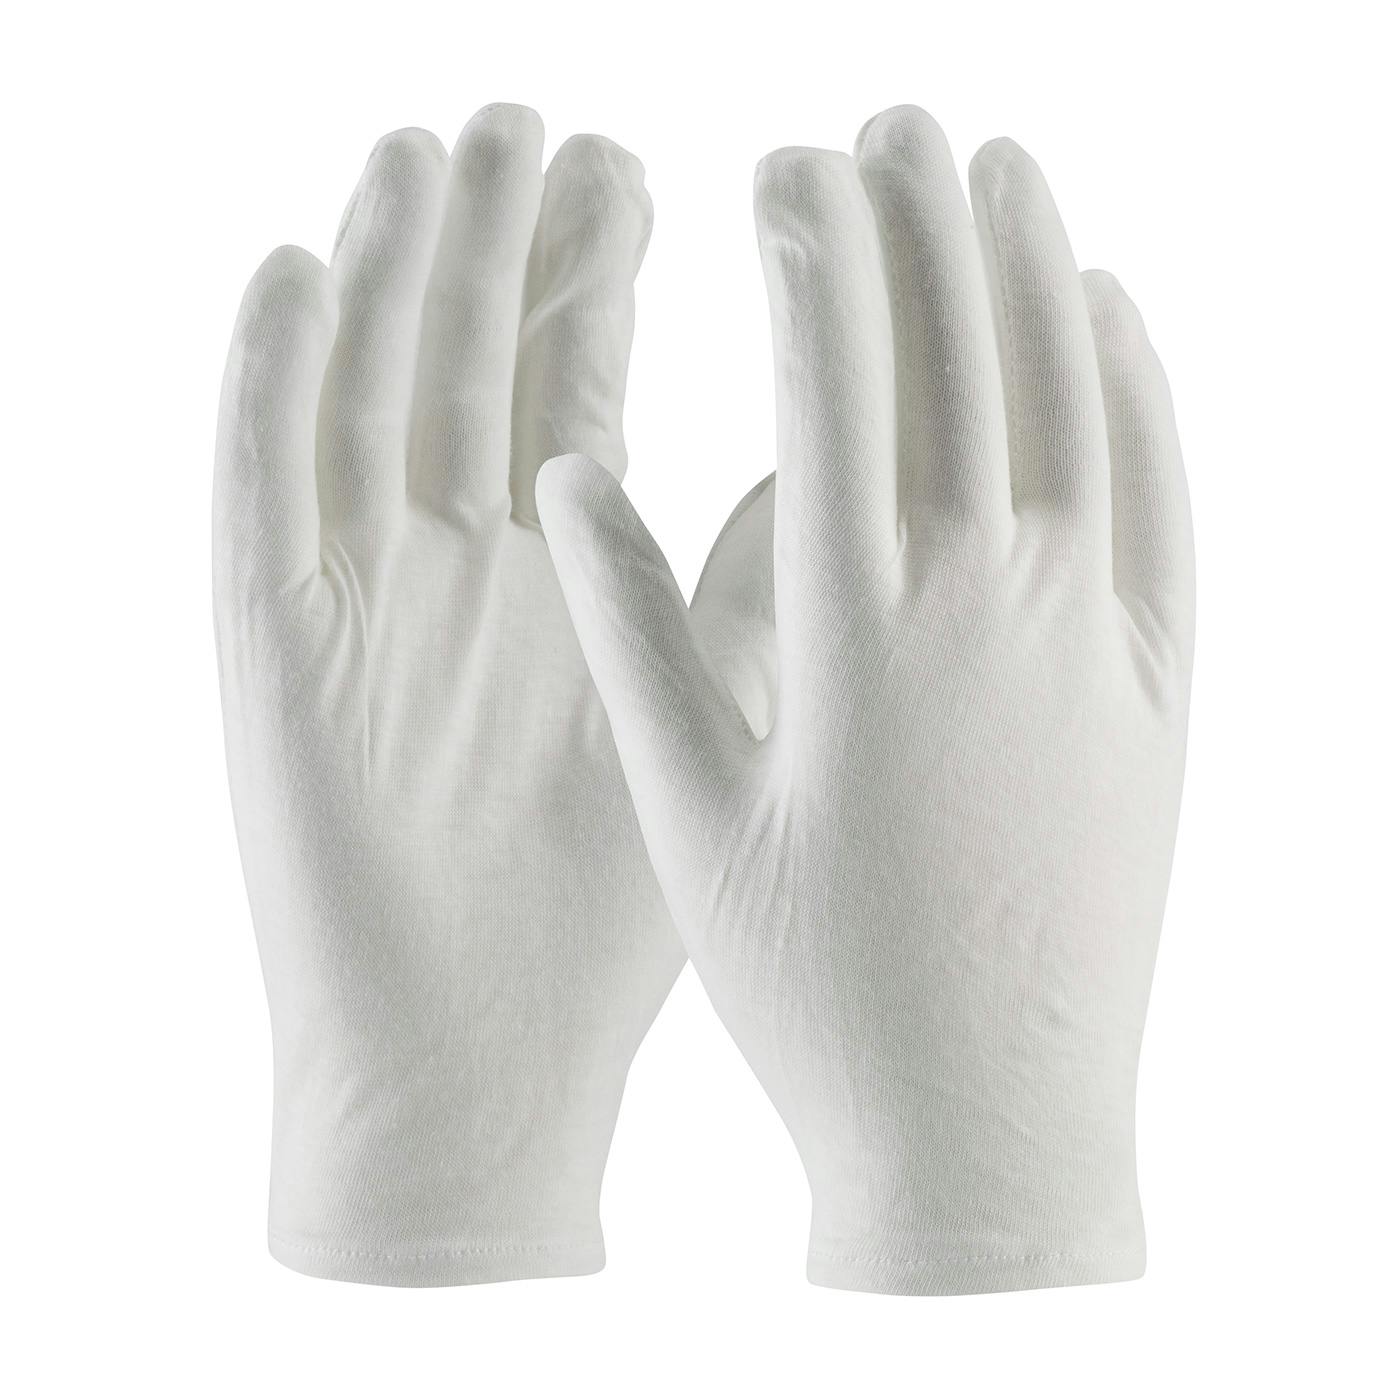 Medium Weight Cotton Lisle Inspection Glove with Rolled Hem Cuff - Men's, White (97-520R) - MENS